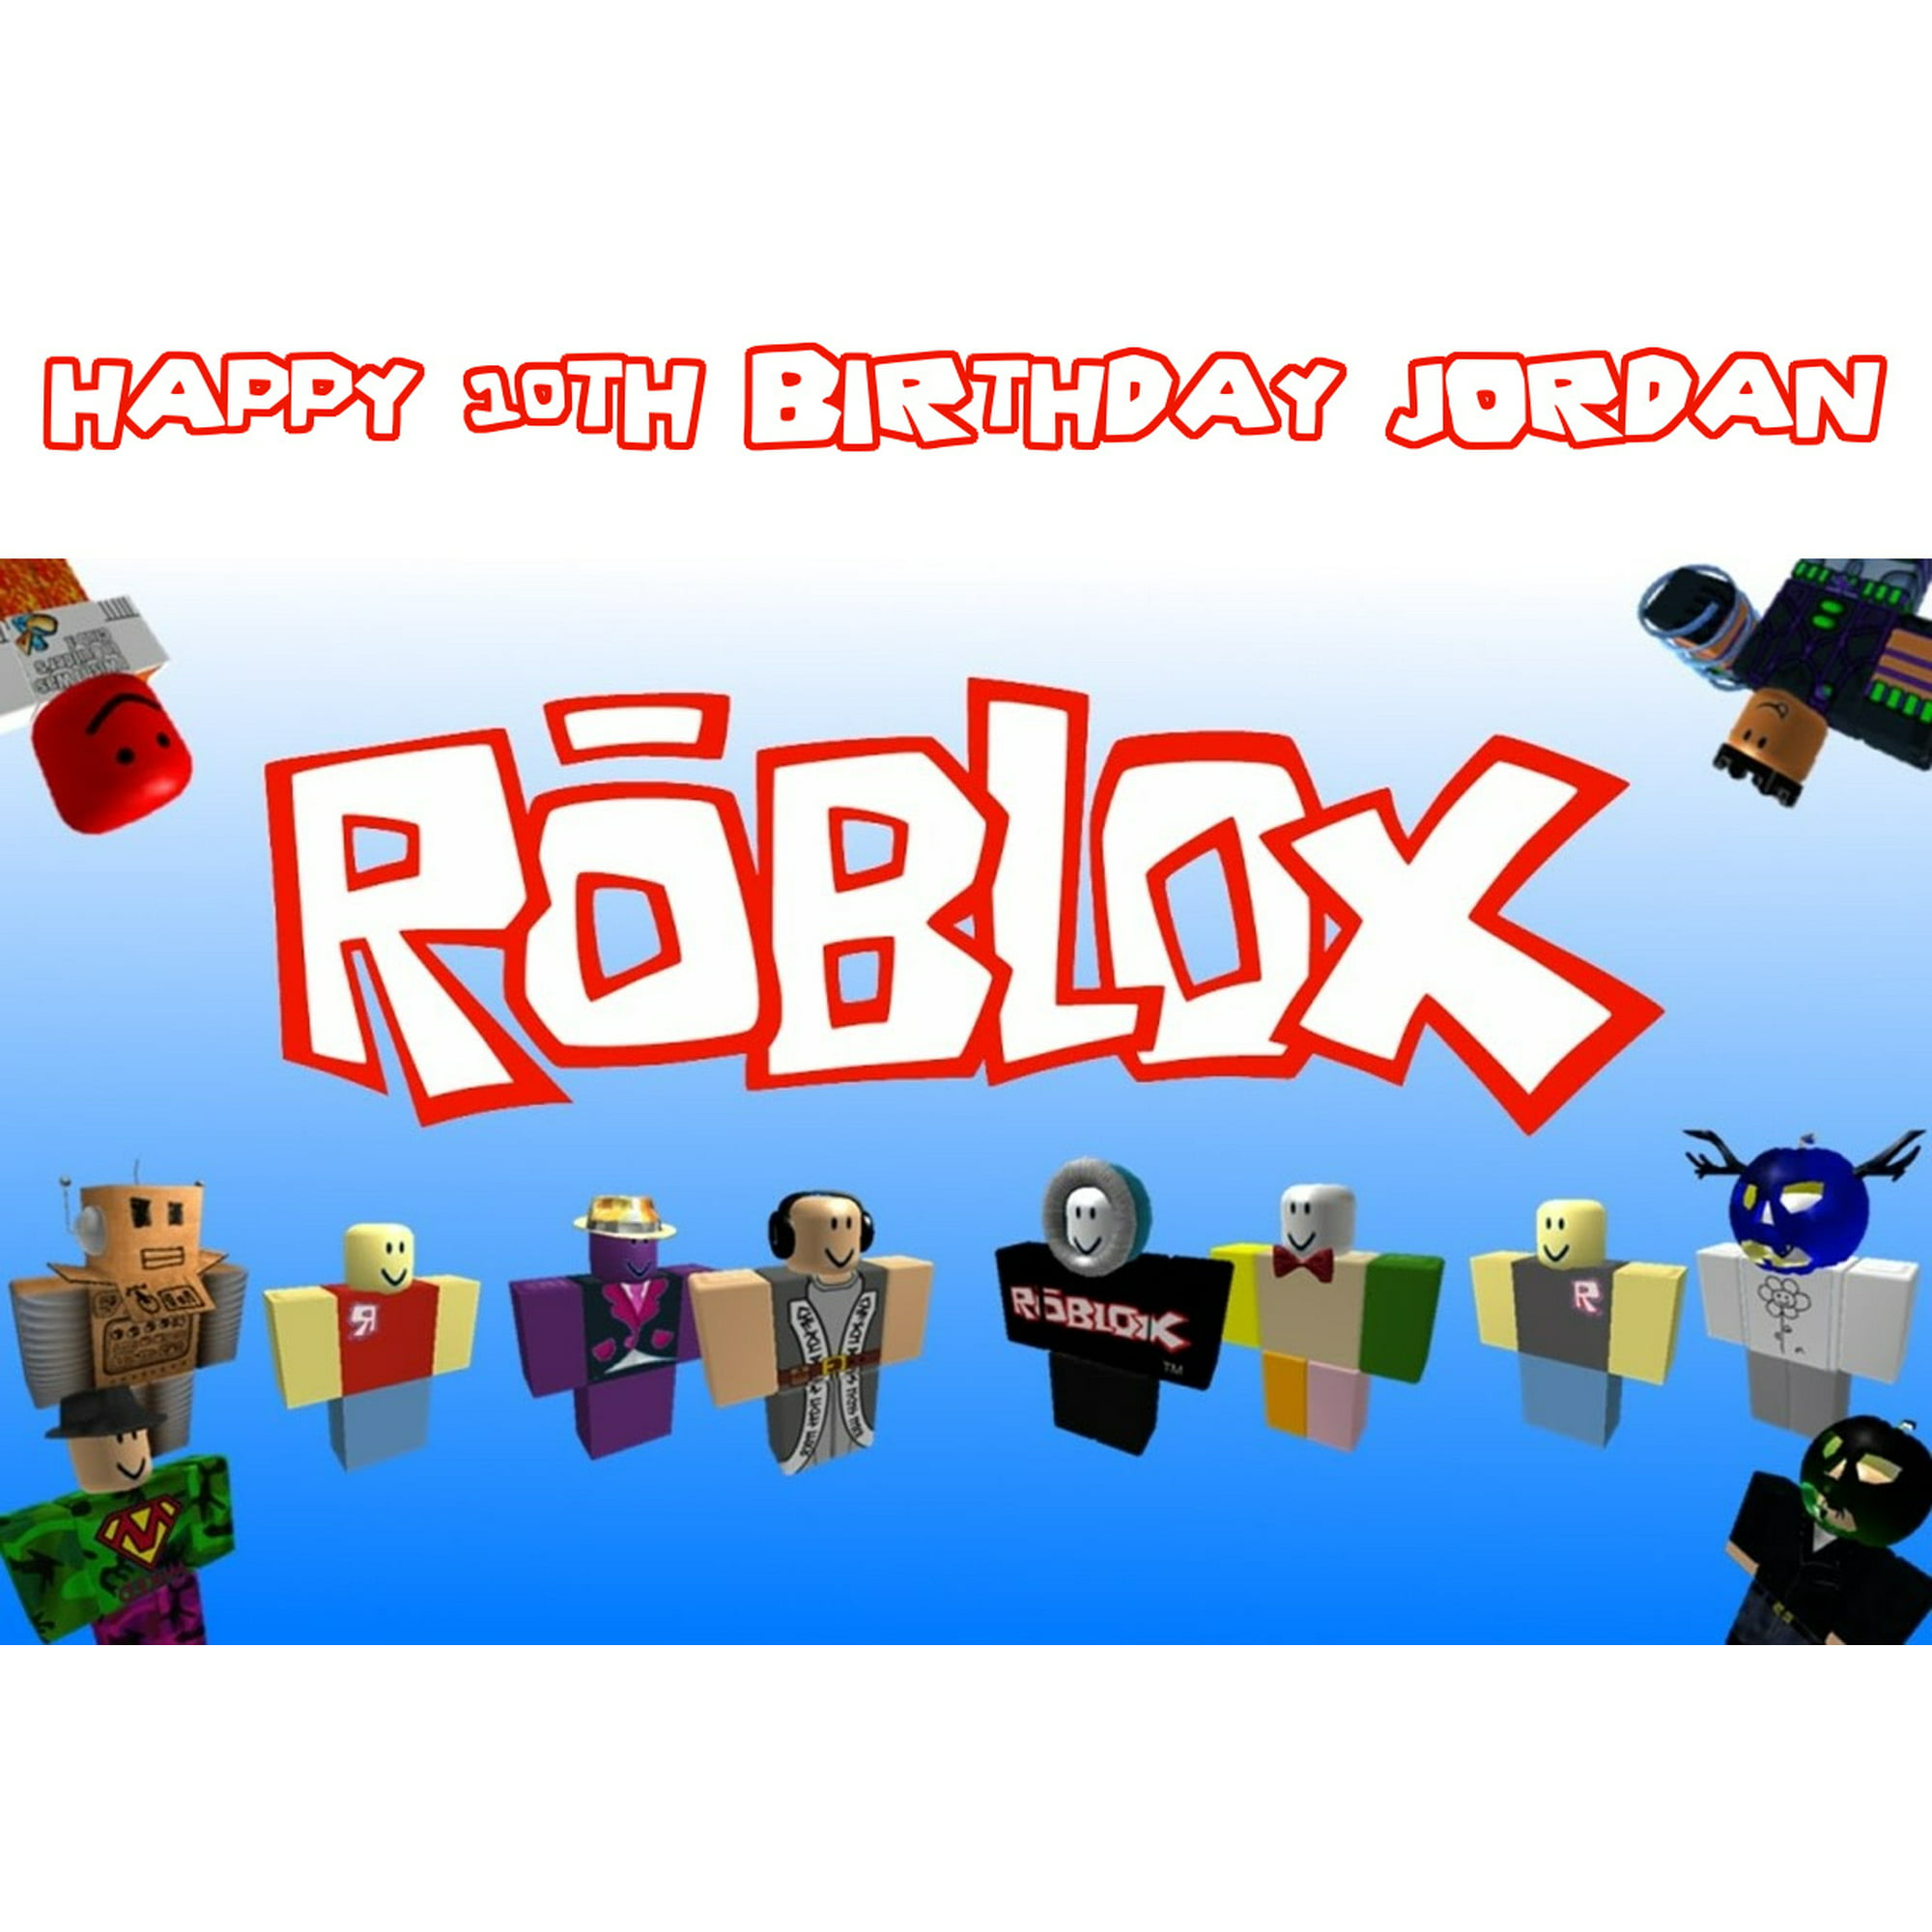 Roblox Custom Player Happy Birthday Edible Cake Topper Image Abpid00150v1 Walmart Com Walmart Com - fluffy husky roblox